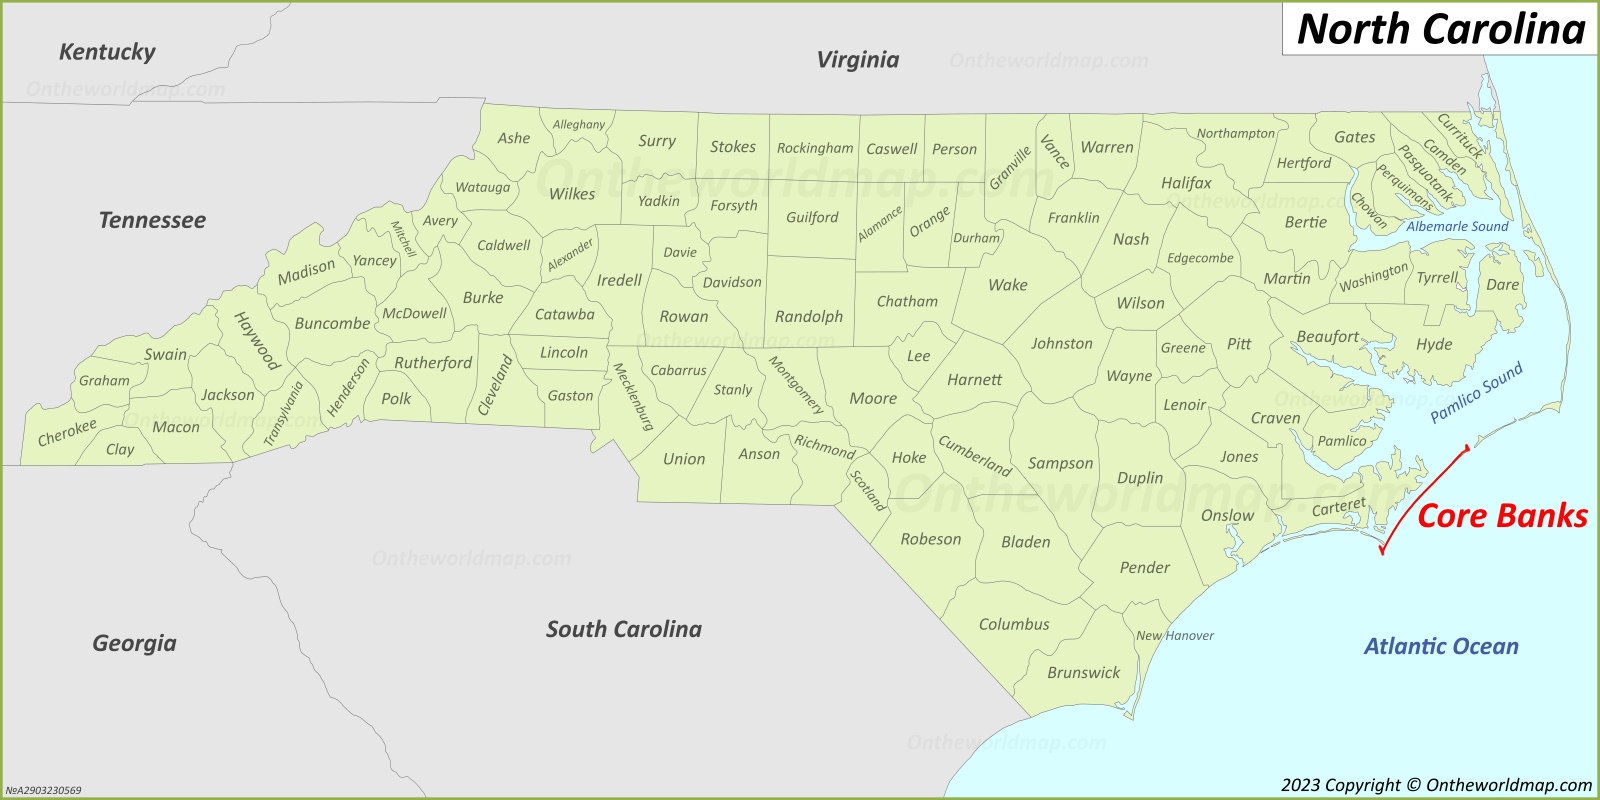 Core Banks Location On The North Carolina Map